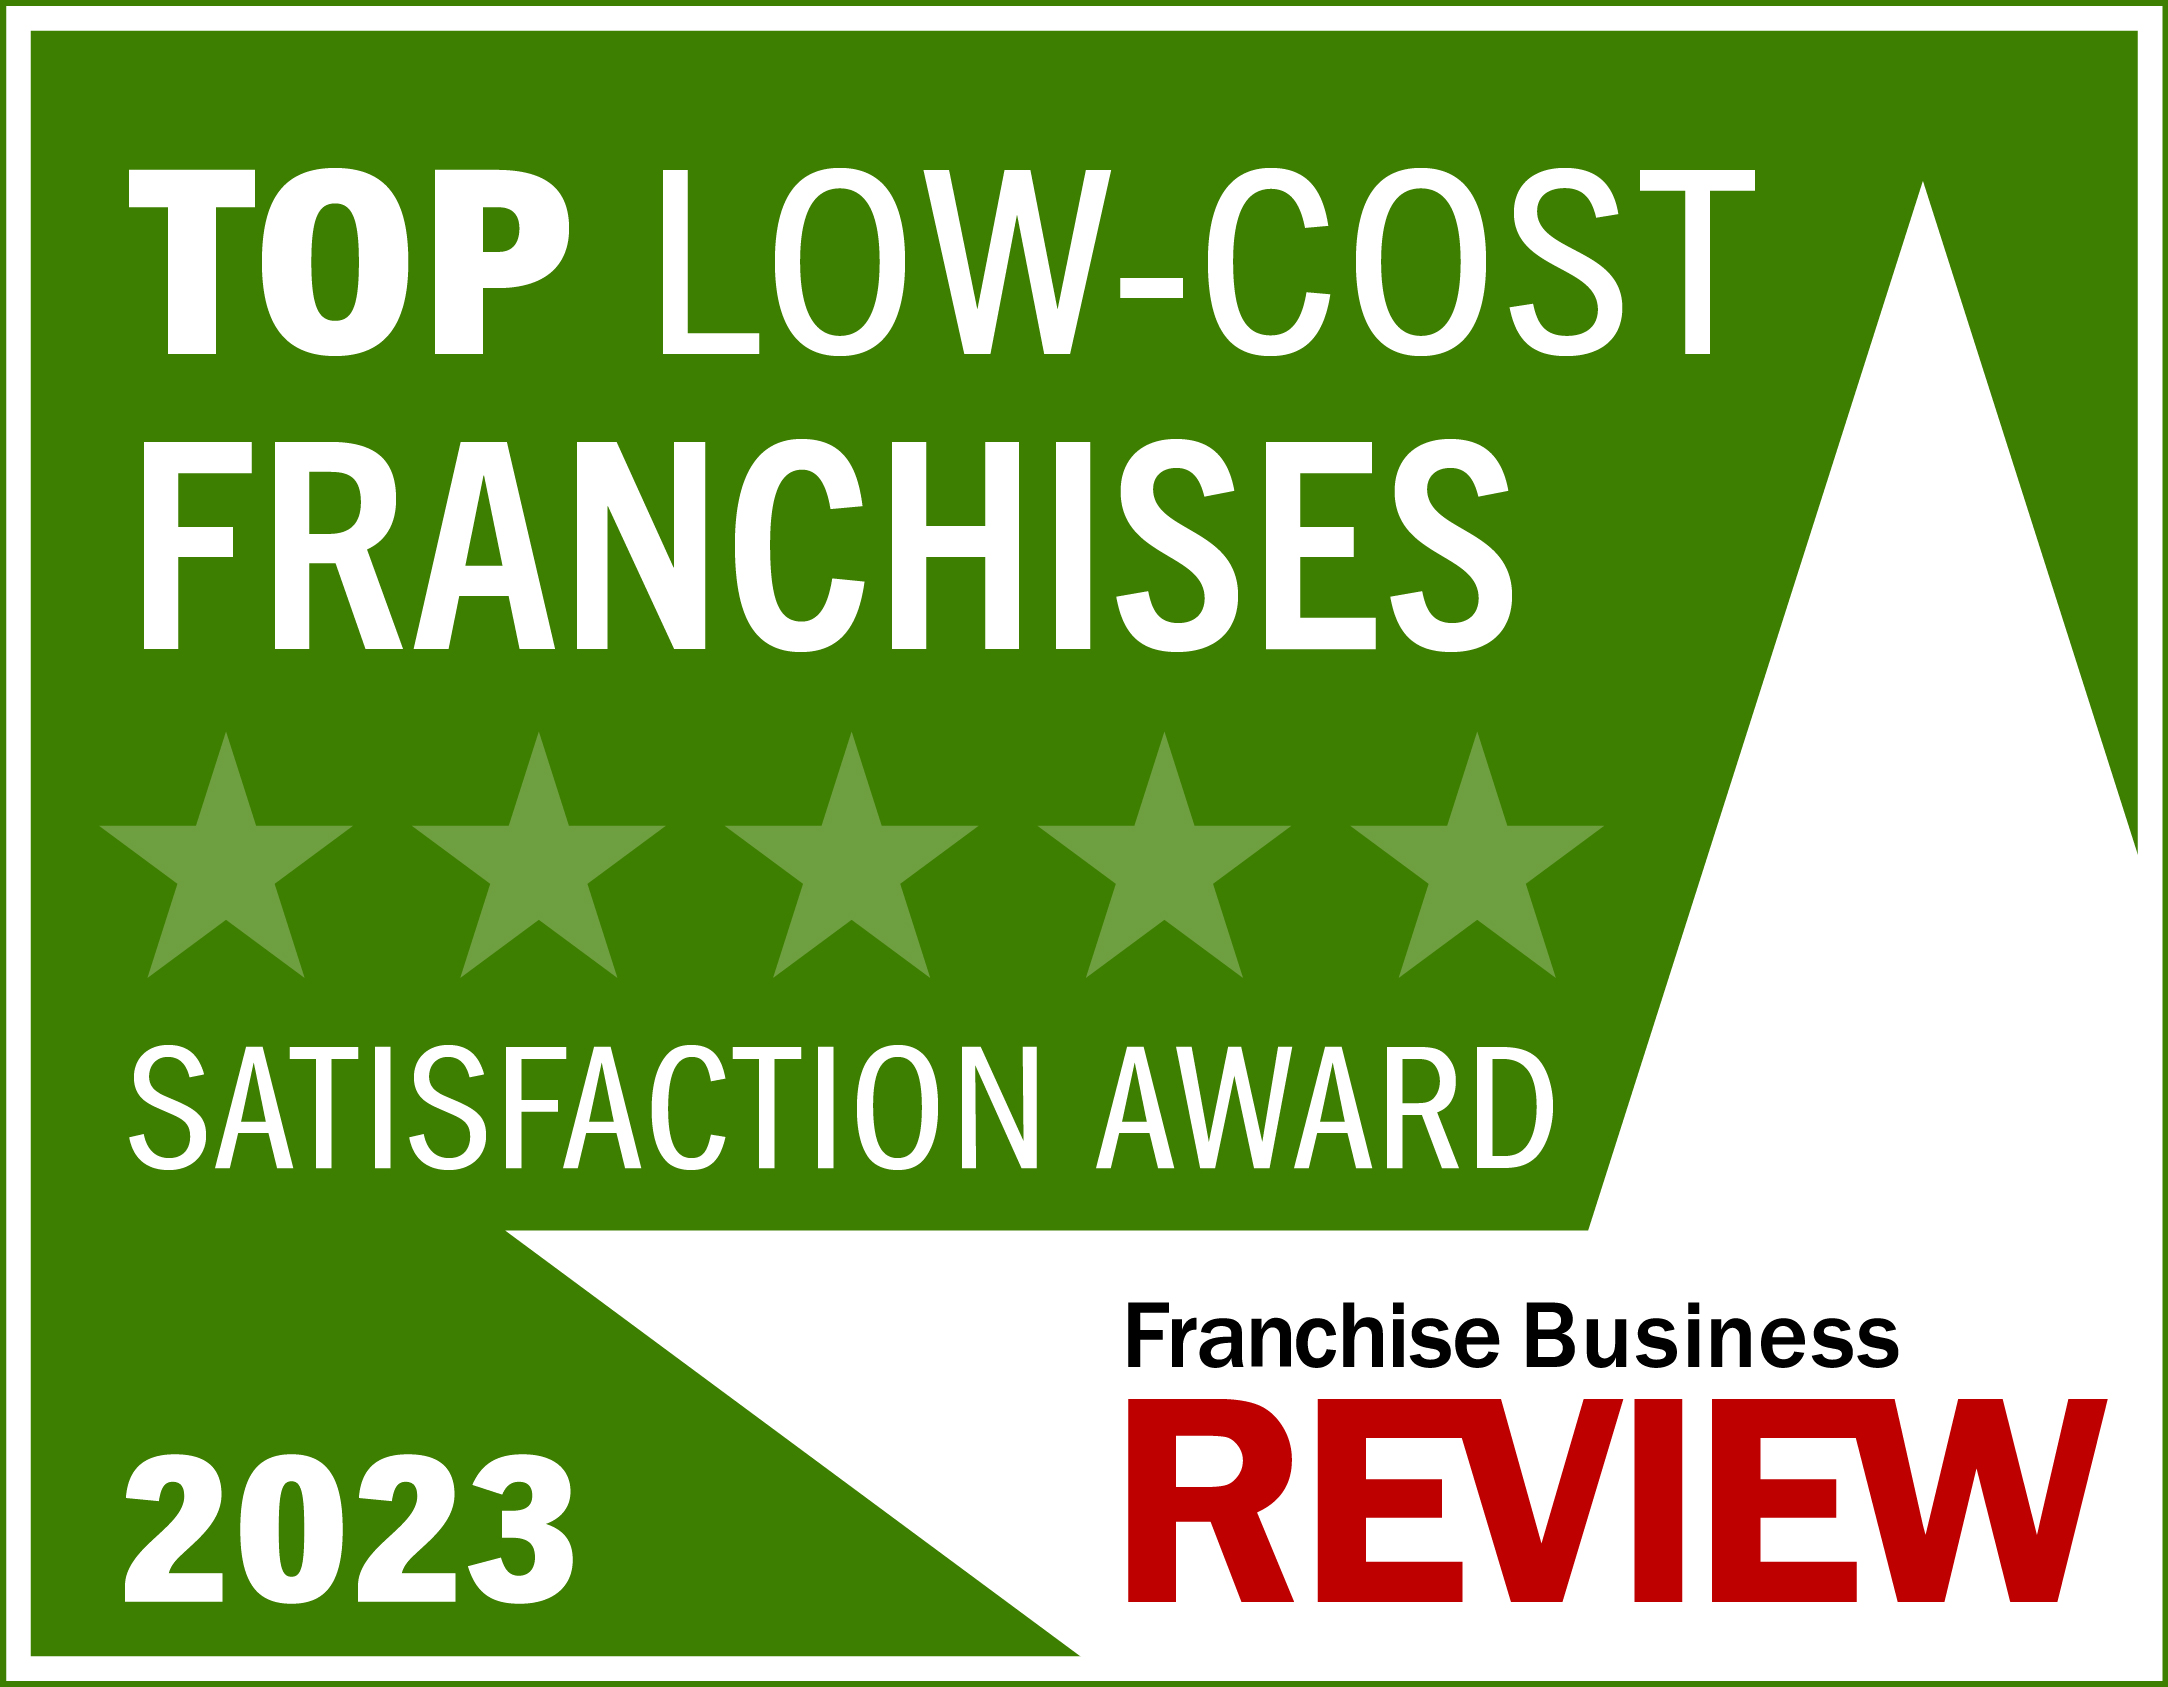 Franchise Business Review Best Low Cost Franchises  - 2023